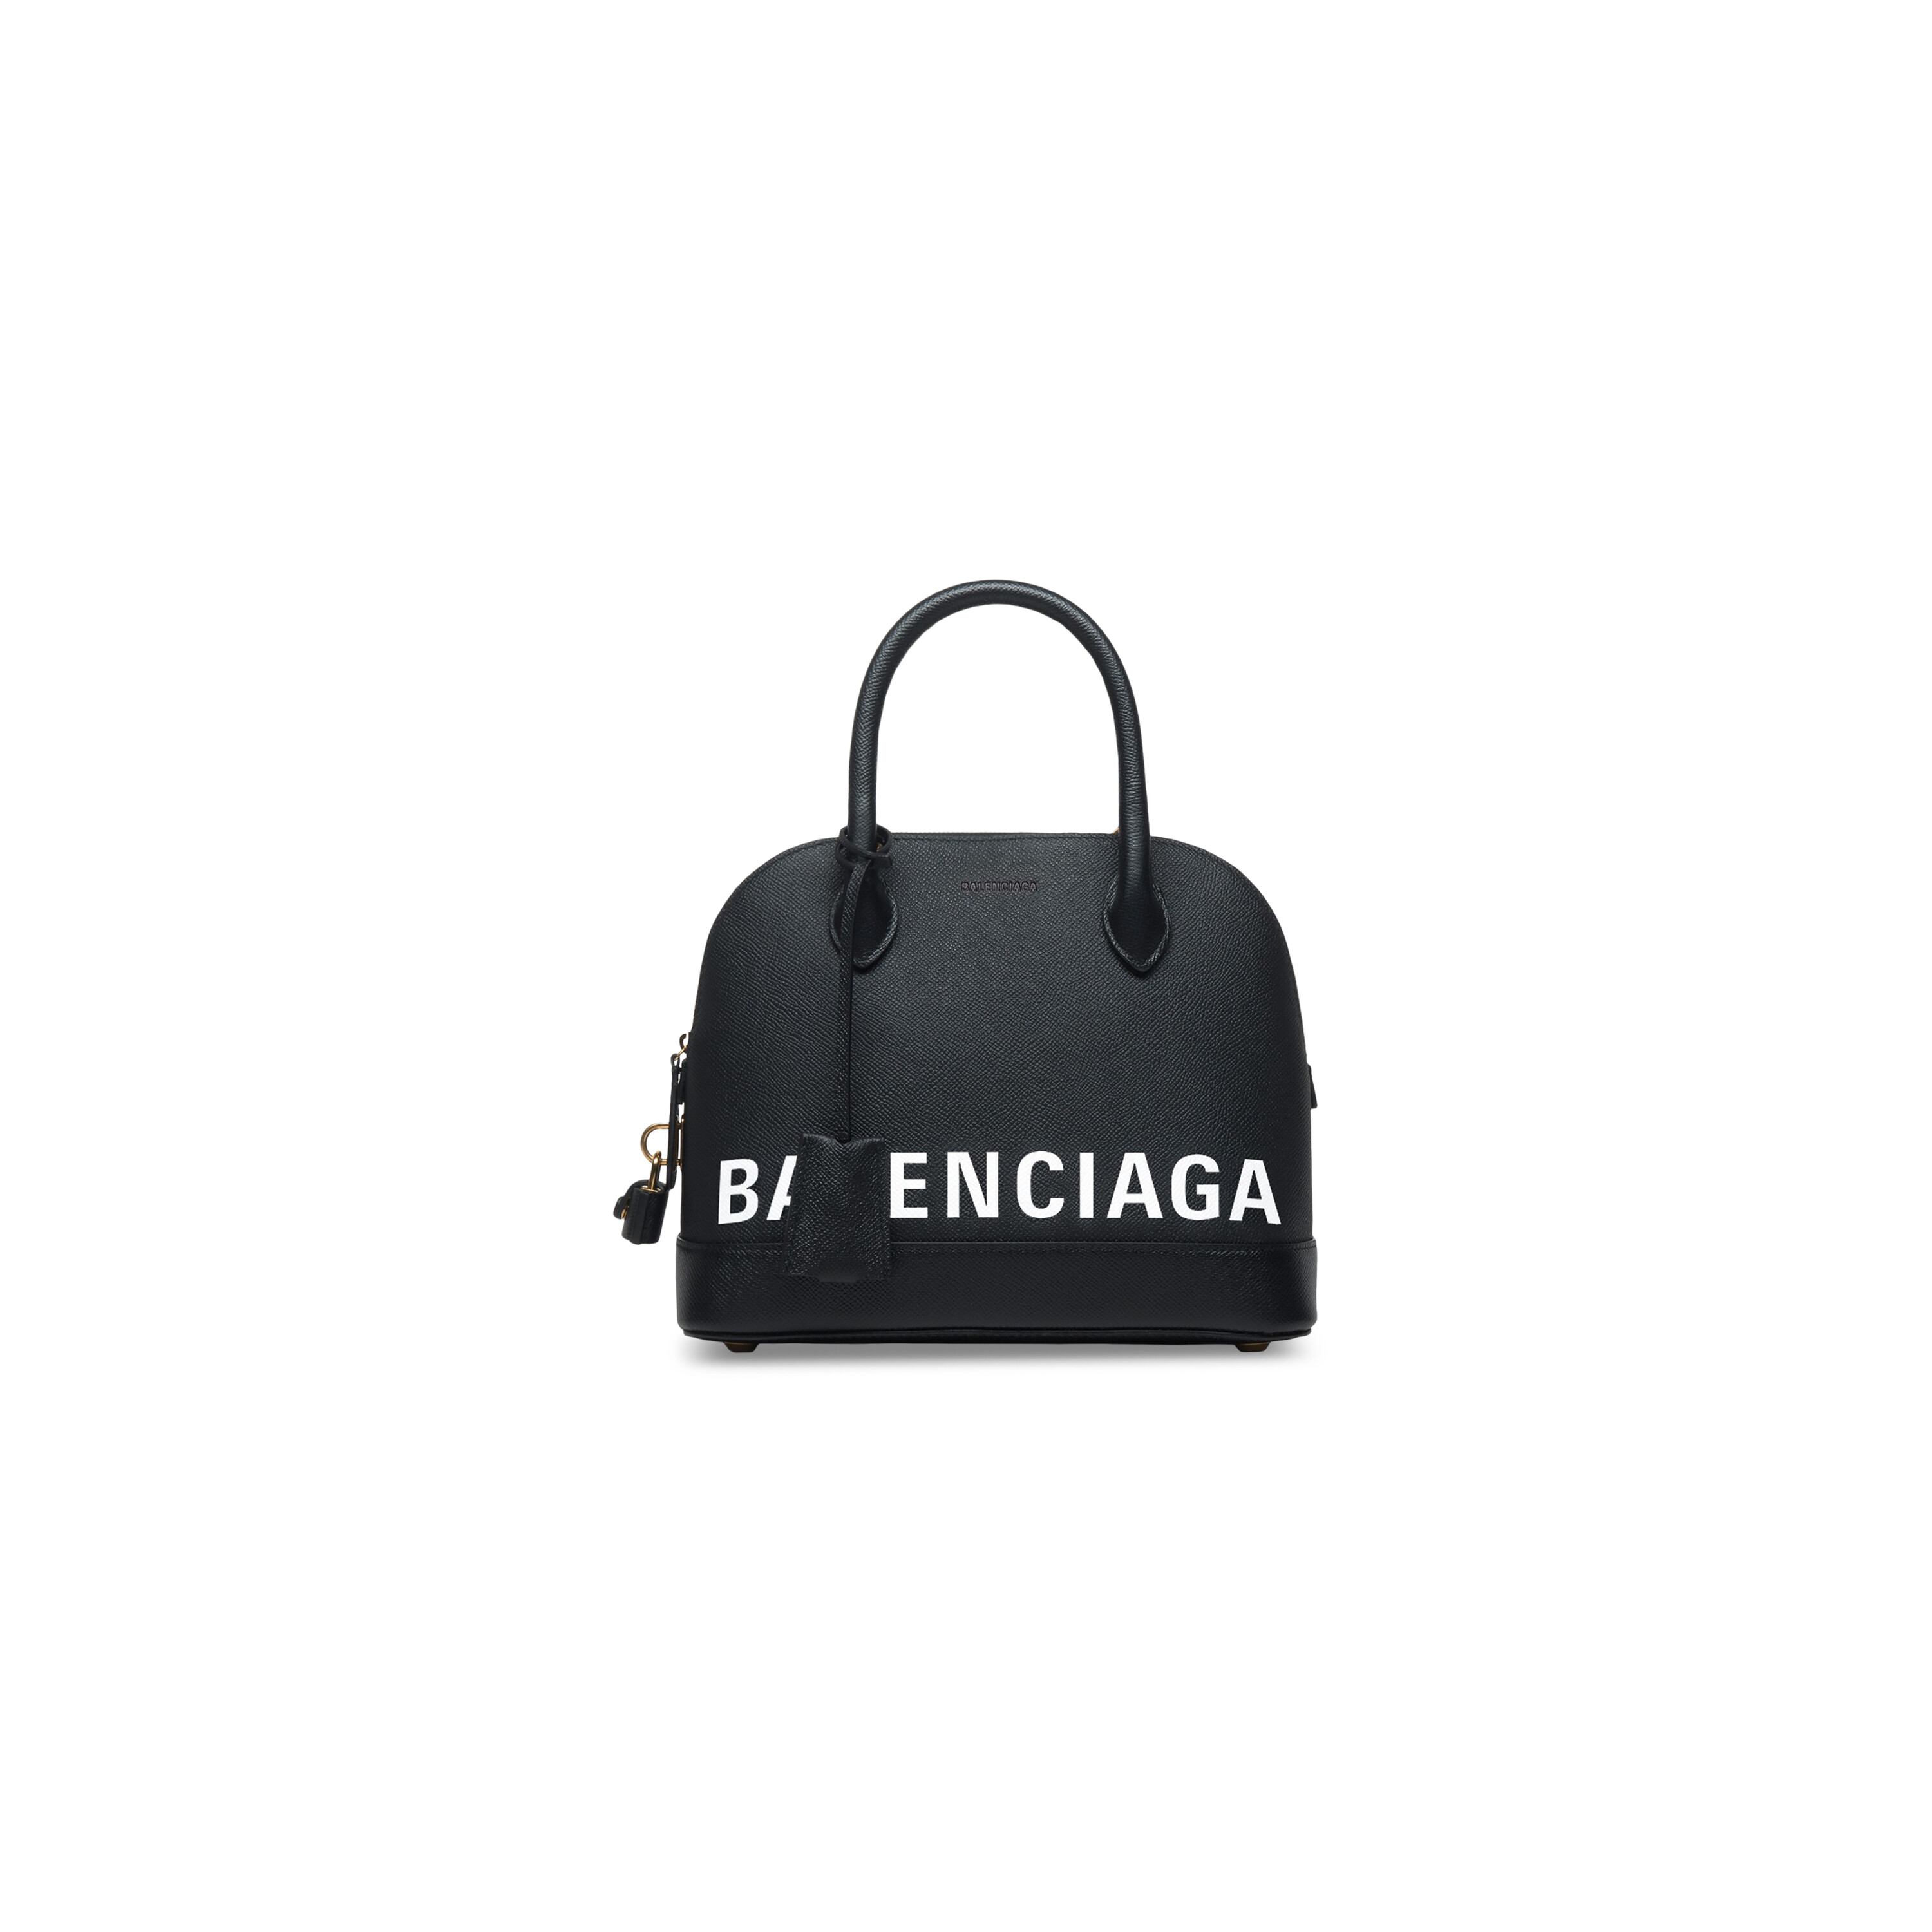 Tổng hợp 73+ về balenciaga bag black friday - f5 fashion